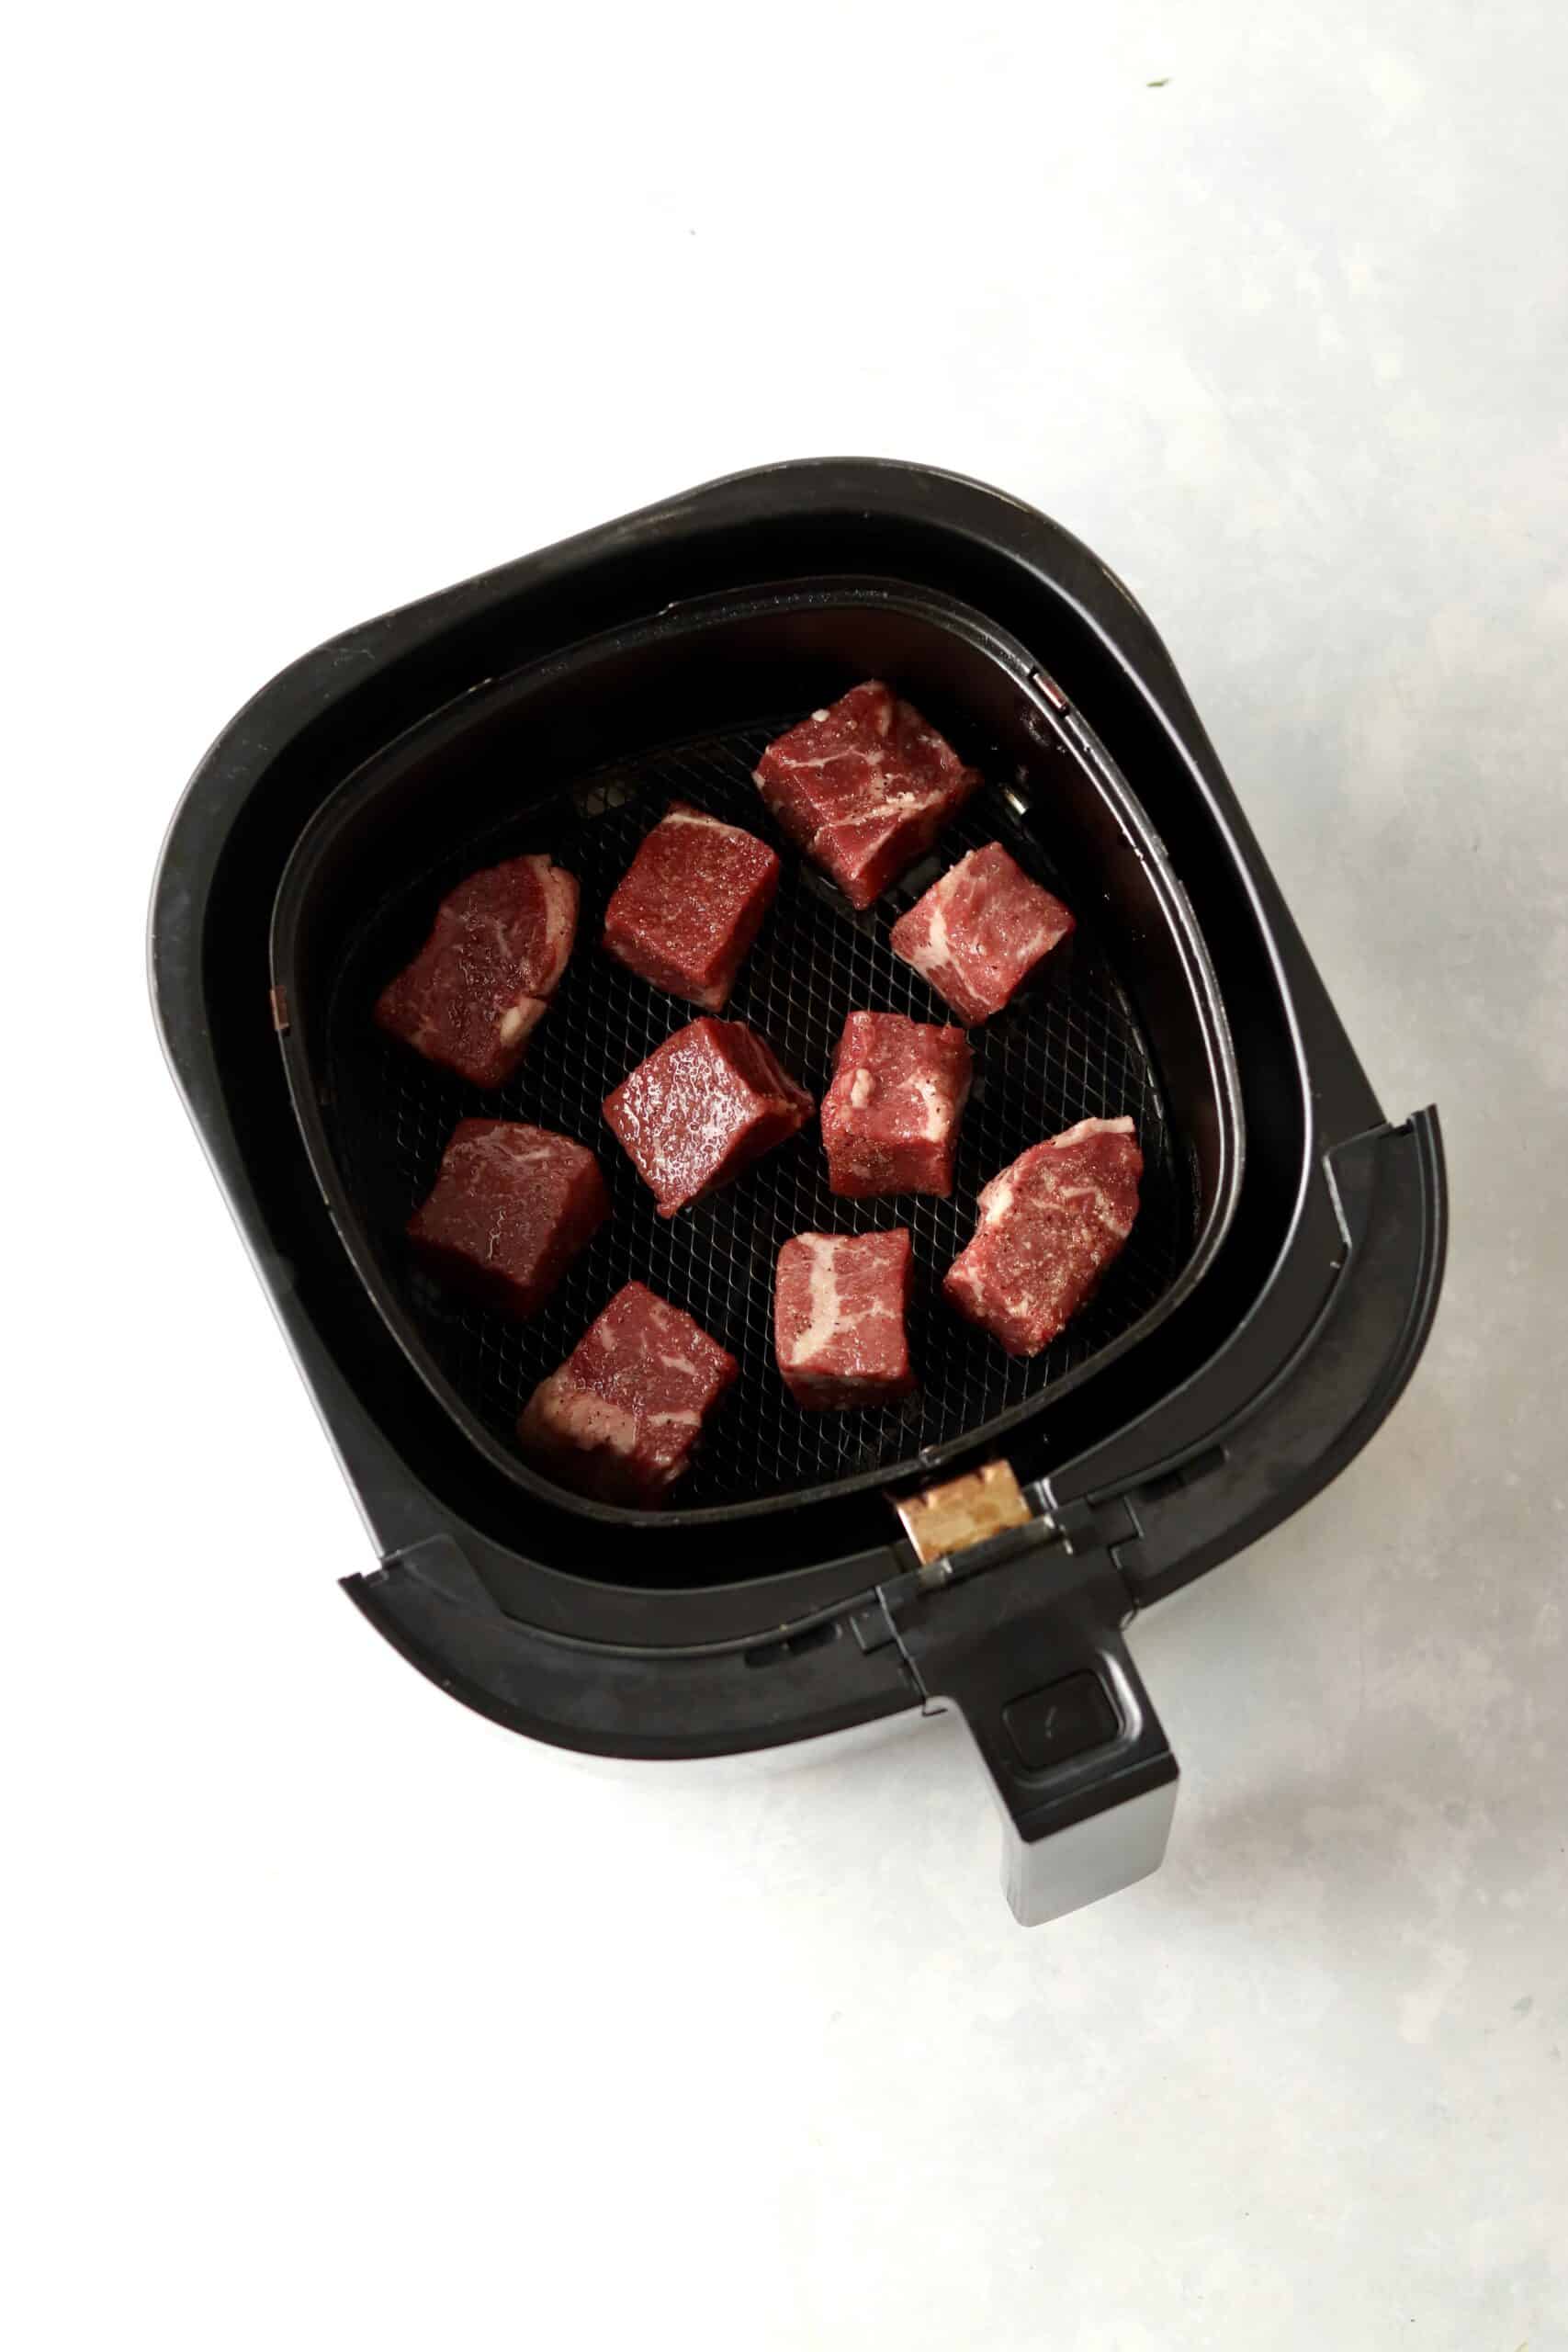 raw steak tips in air fryer